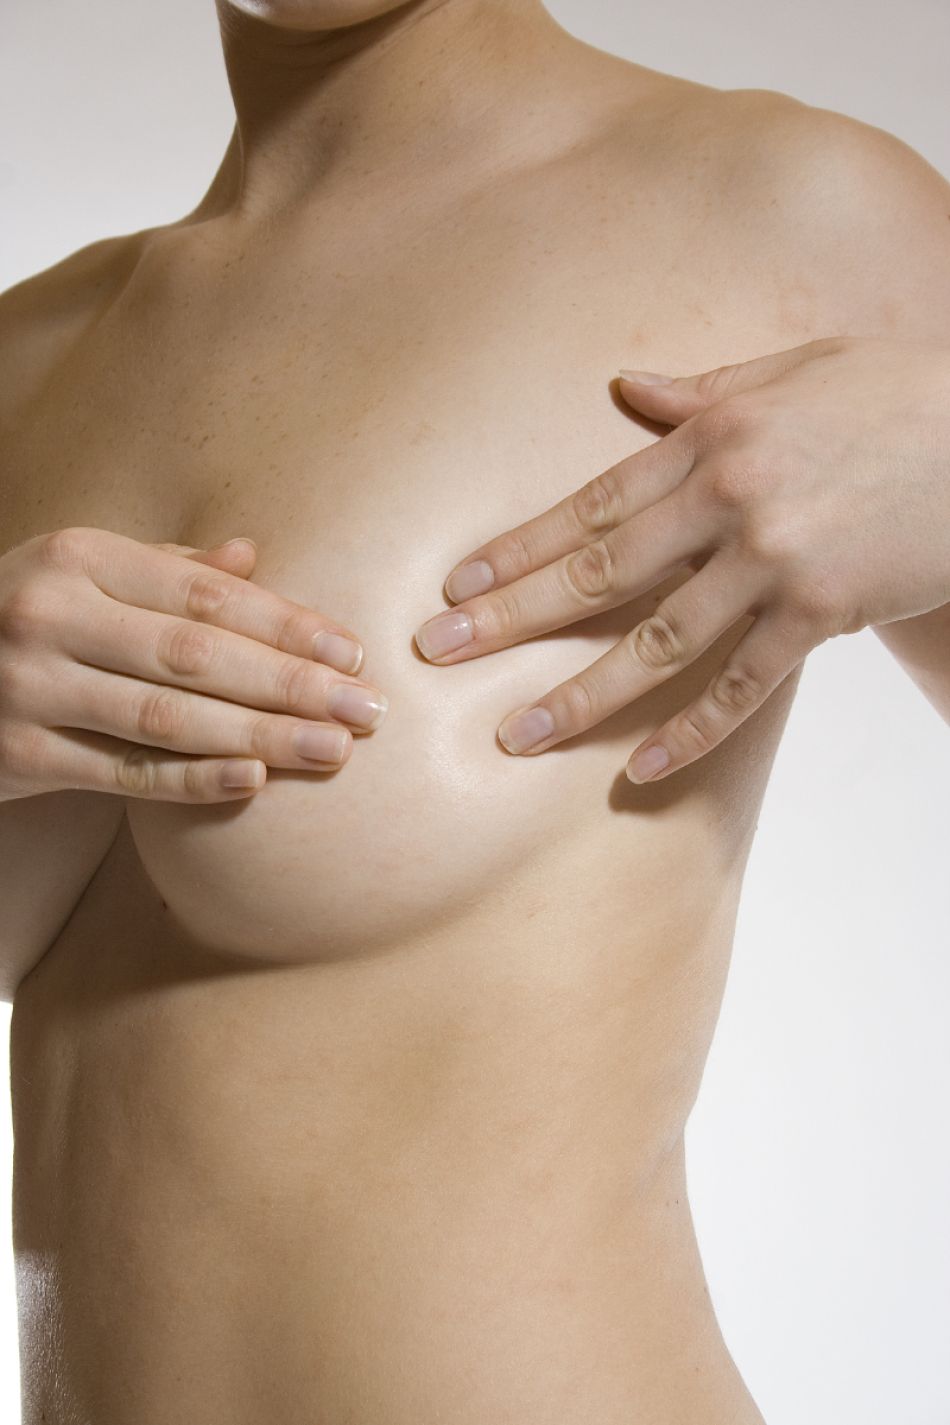 Eine Frau tastet sich die linke Brust ab.